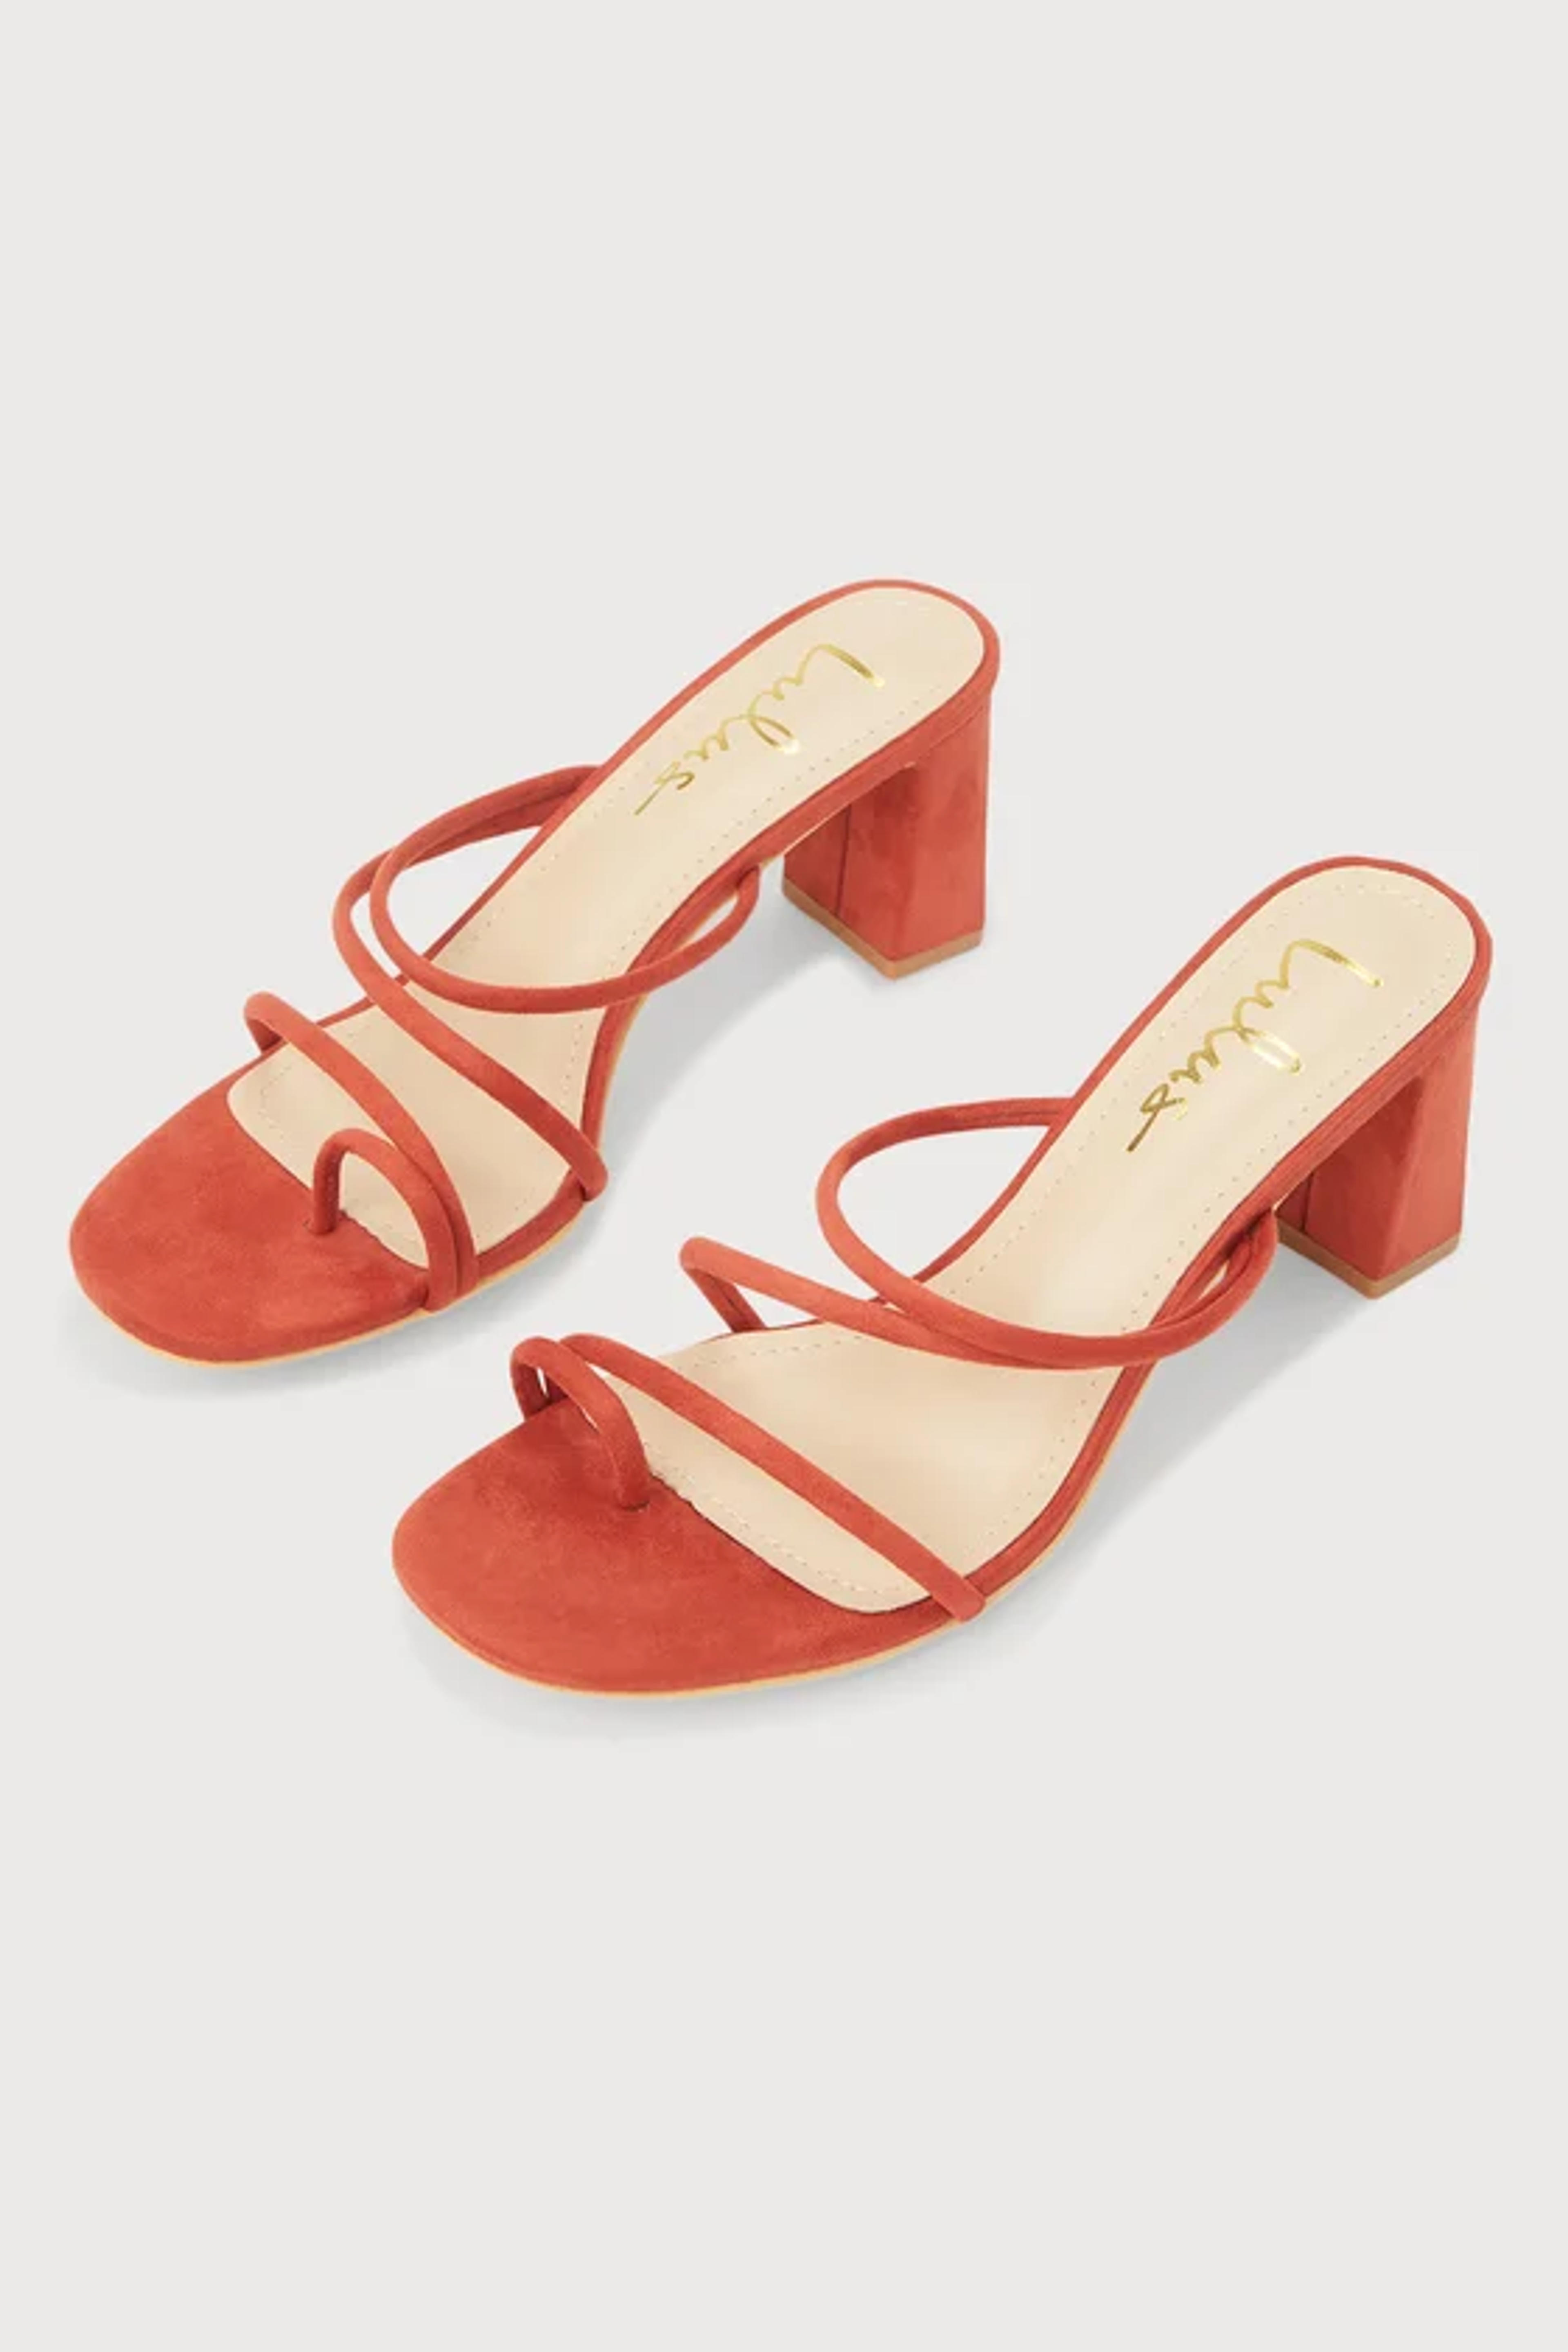 Terracotta Suede Sandals - High Heel Sandals - Slide Sandals - Lulus